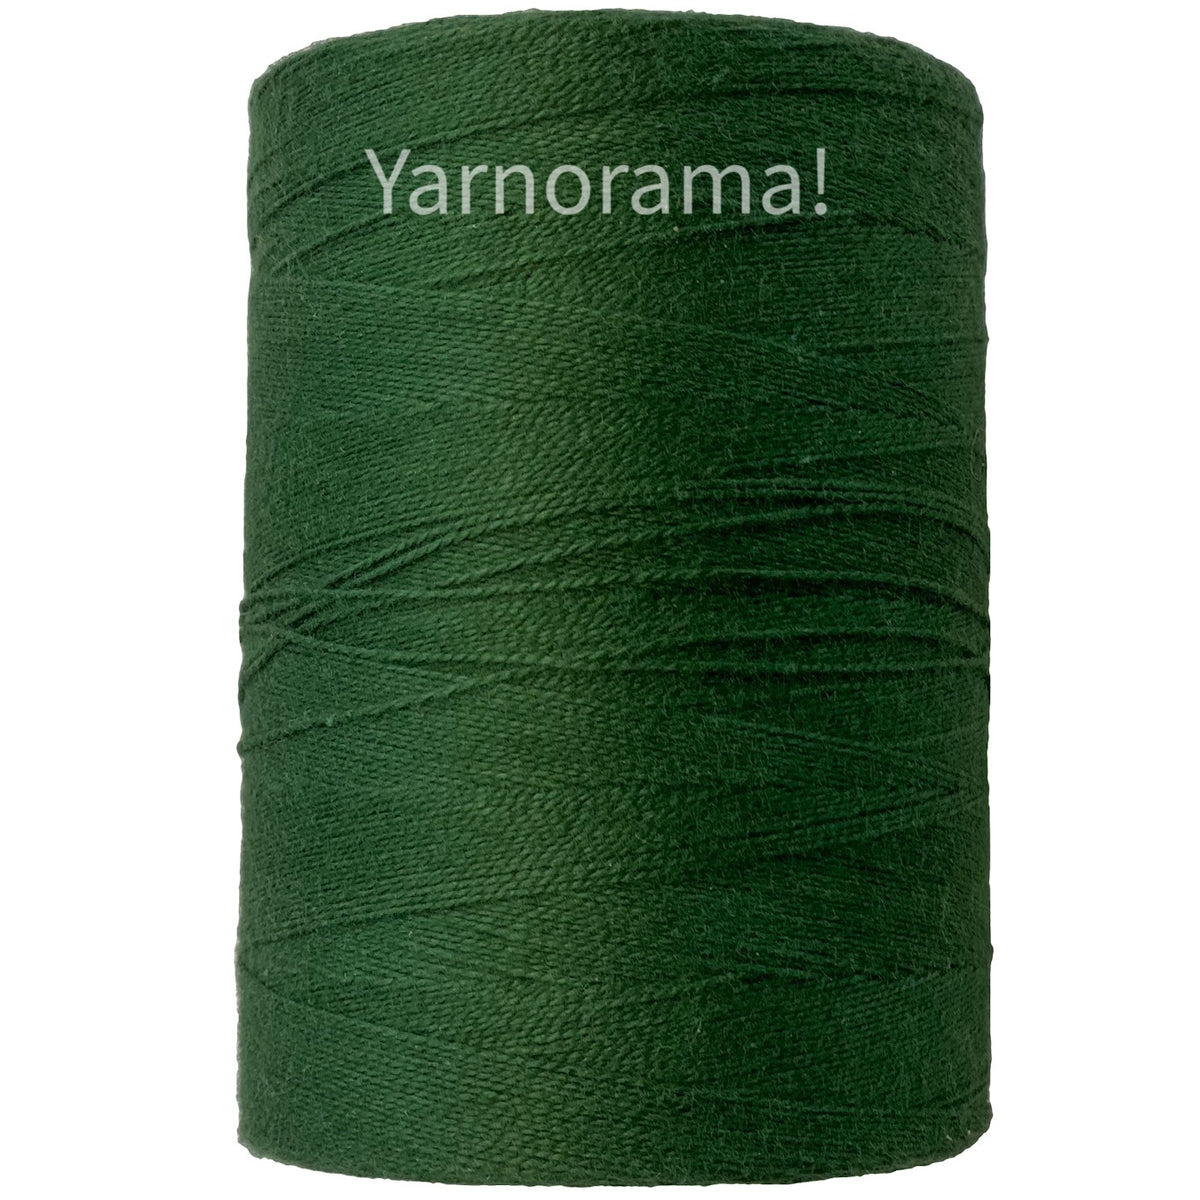 8/4 Unmercerized Cotton - Maurice Brassard-Weaving Yarn-Dark Olive - 8266-Yarnorama